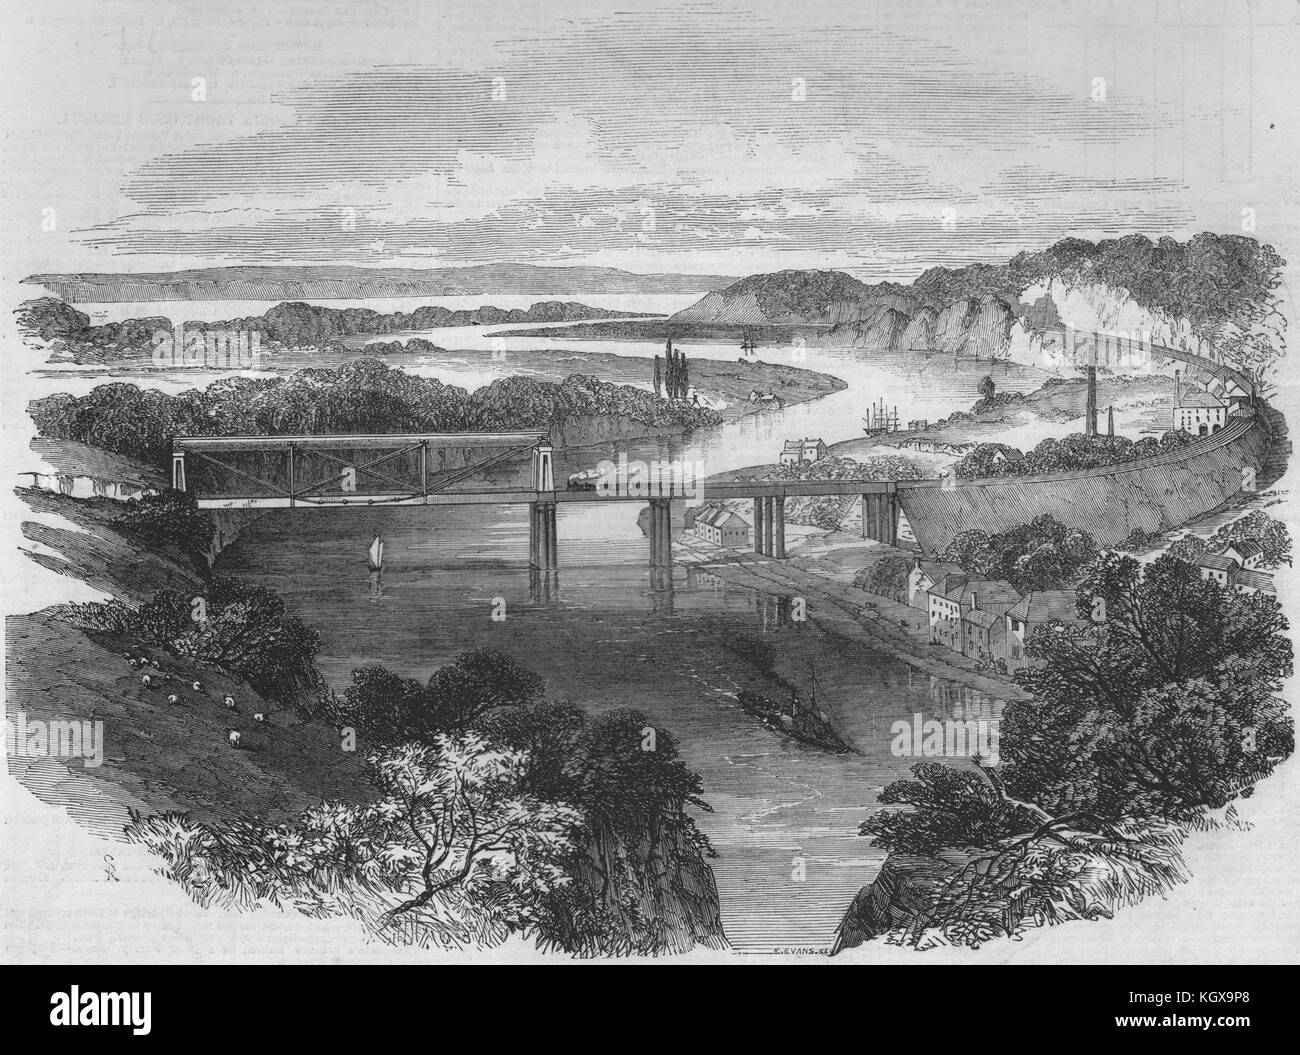 South Wales Railway. Chepstow Tubular Suspension Bridge. Severn confluence 1852. The Illustrated London News Stock Photo